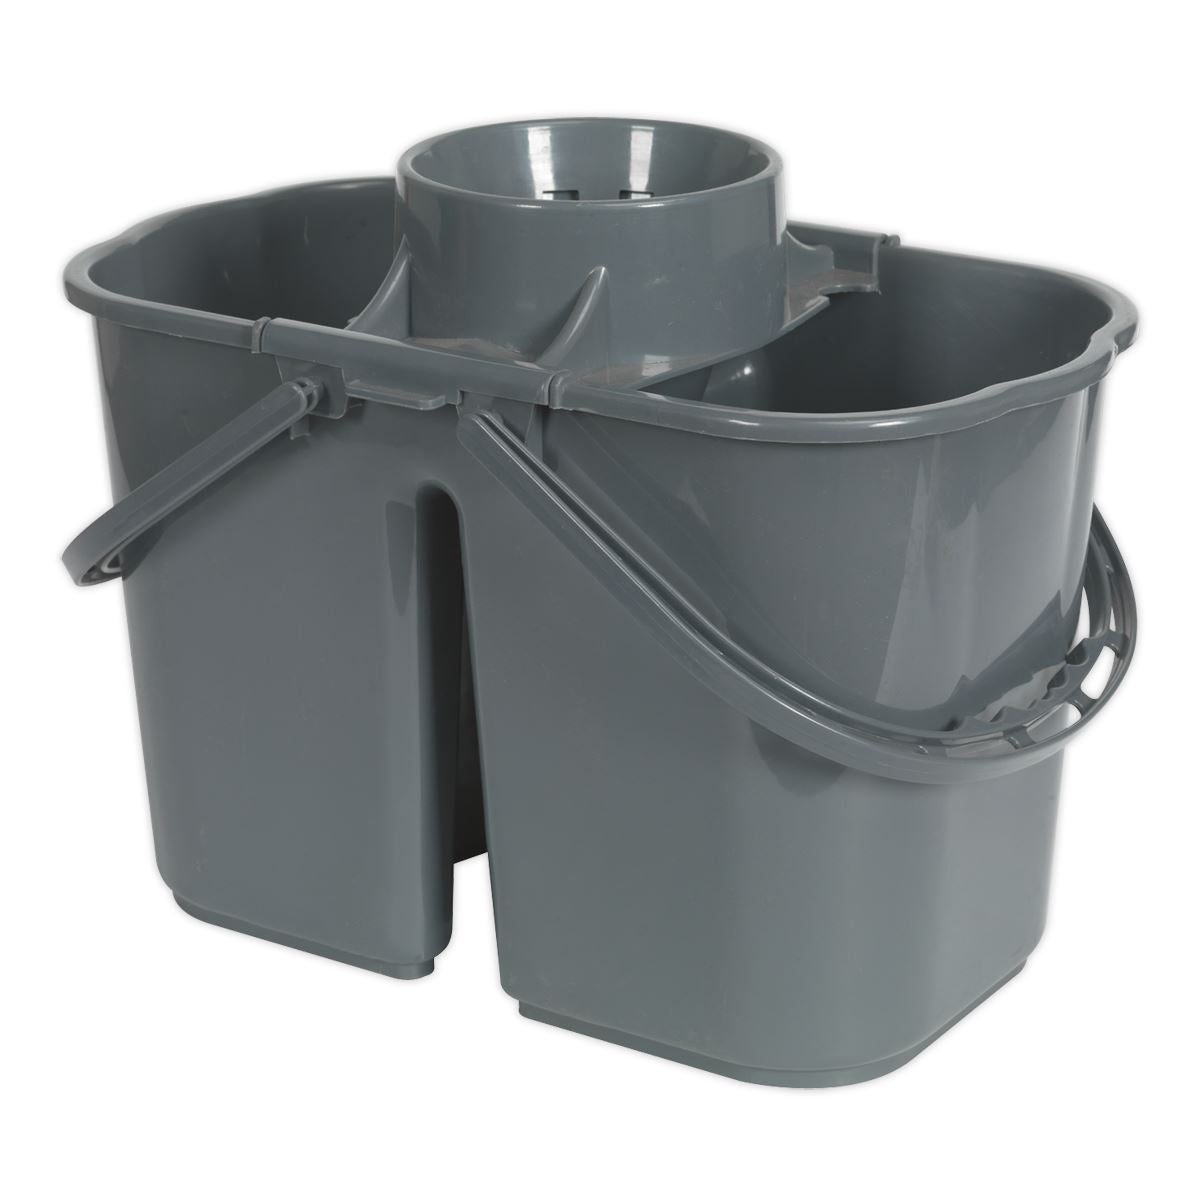 Sealey Mop Bucket 15L - 2 Compartment